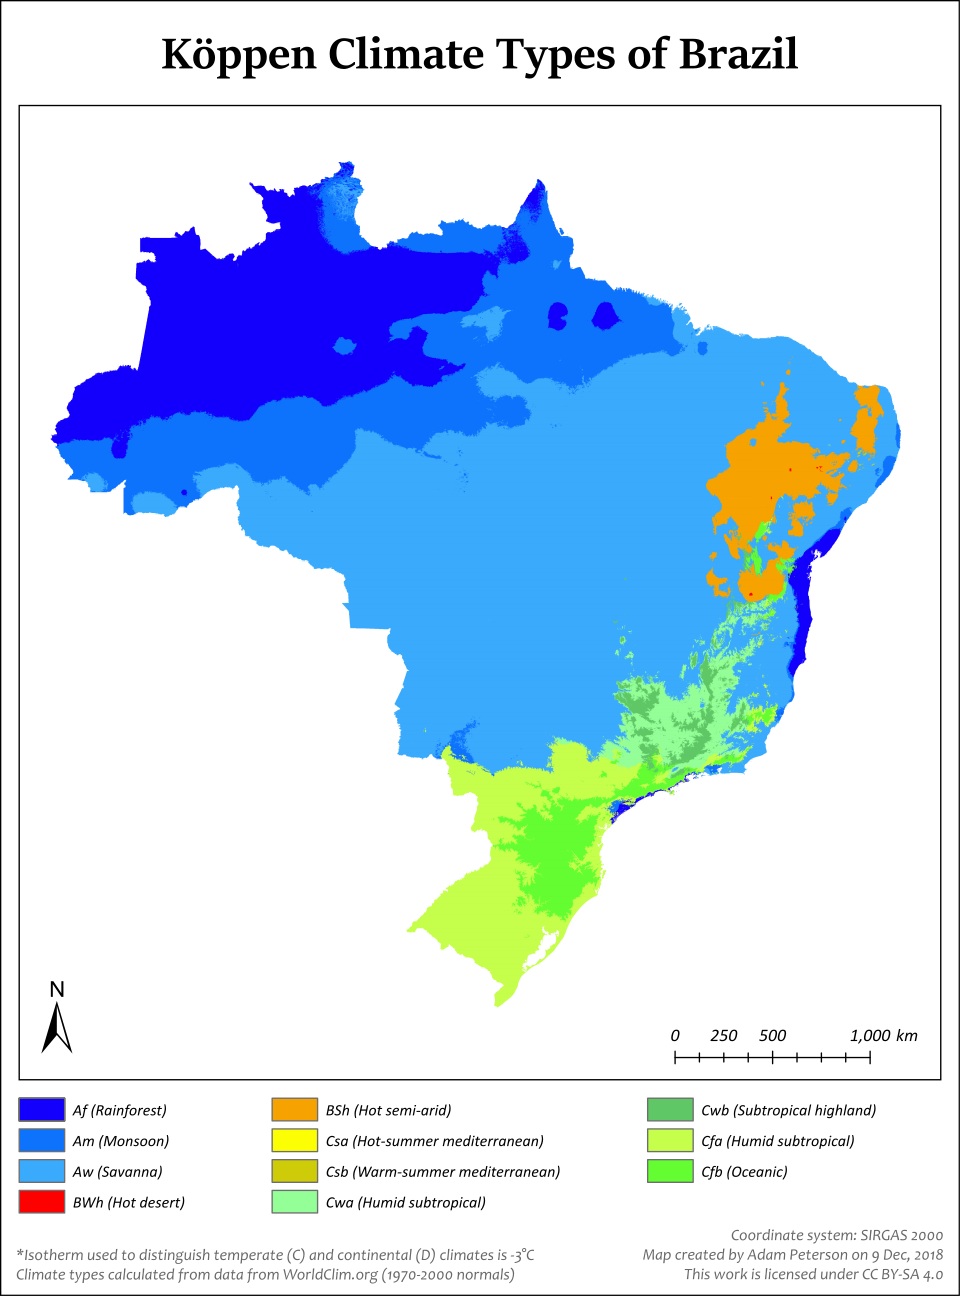 Mapa del clima de Brasil - Tamaño completo | Gifex